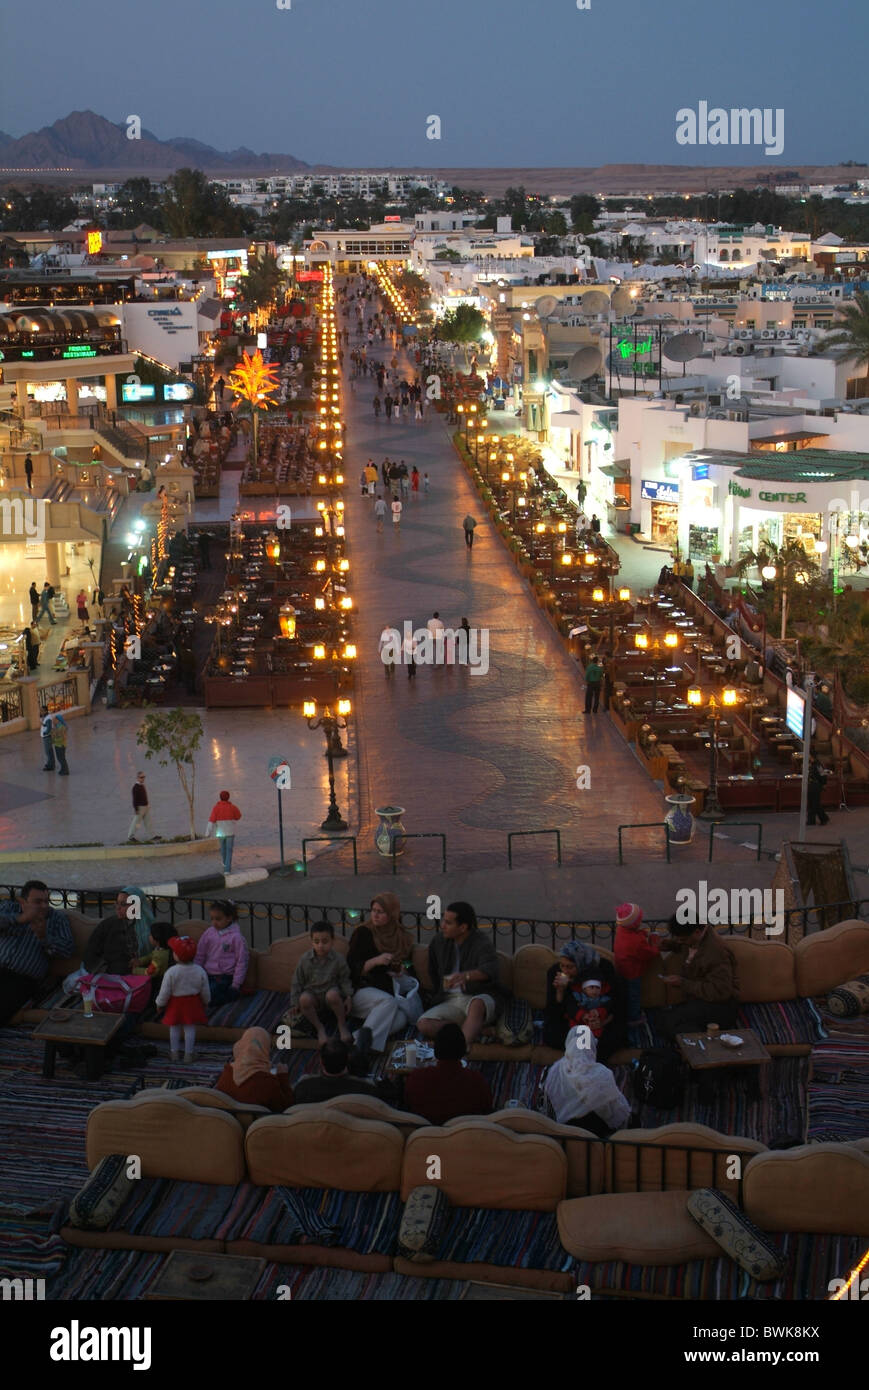 Egypt North Africa charm El sheikh Sharm El-Sheikh Naama bay overview at night night Stock Photo